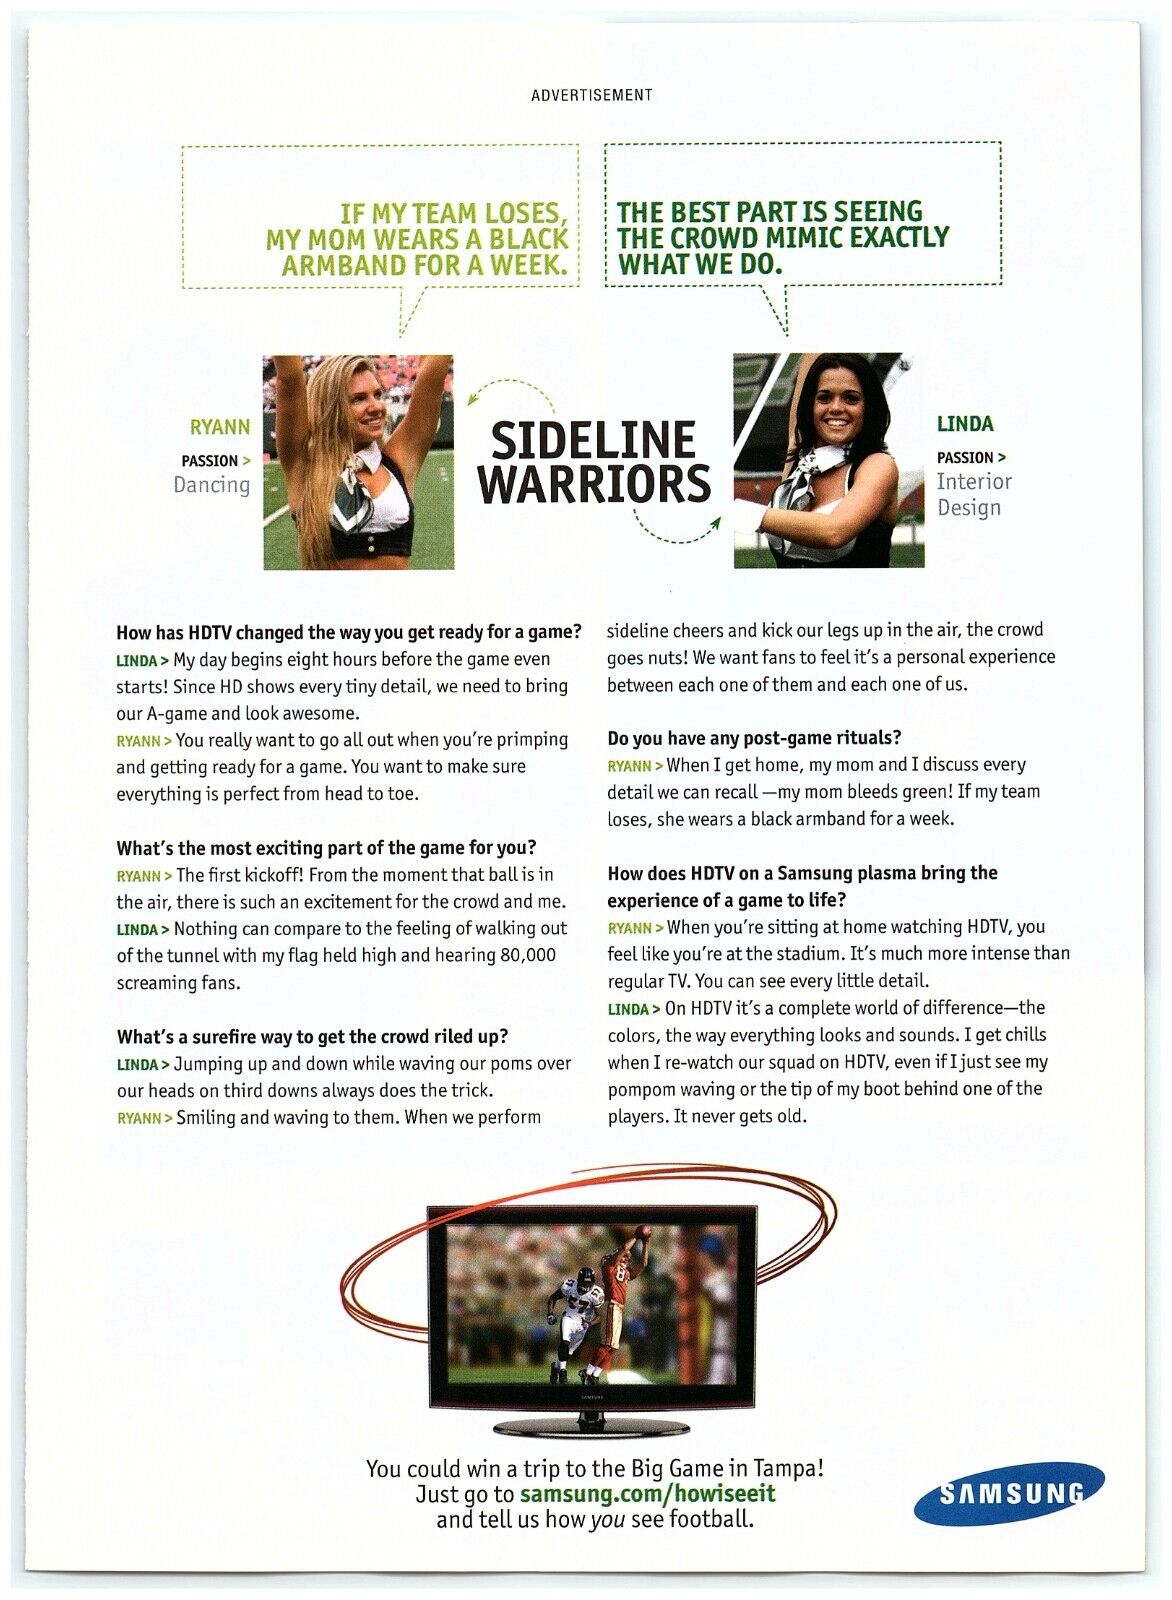 2008 Samsung Plasma HDTV Print Ad, NFL Football Cheerleads Ryann & Linda Q&A